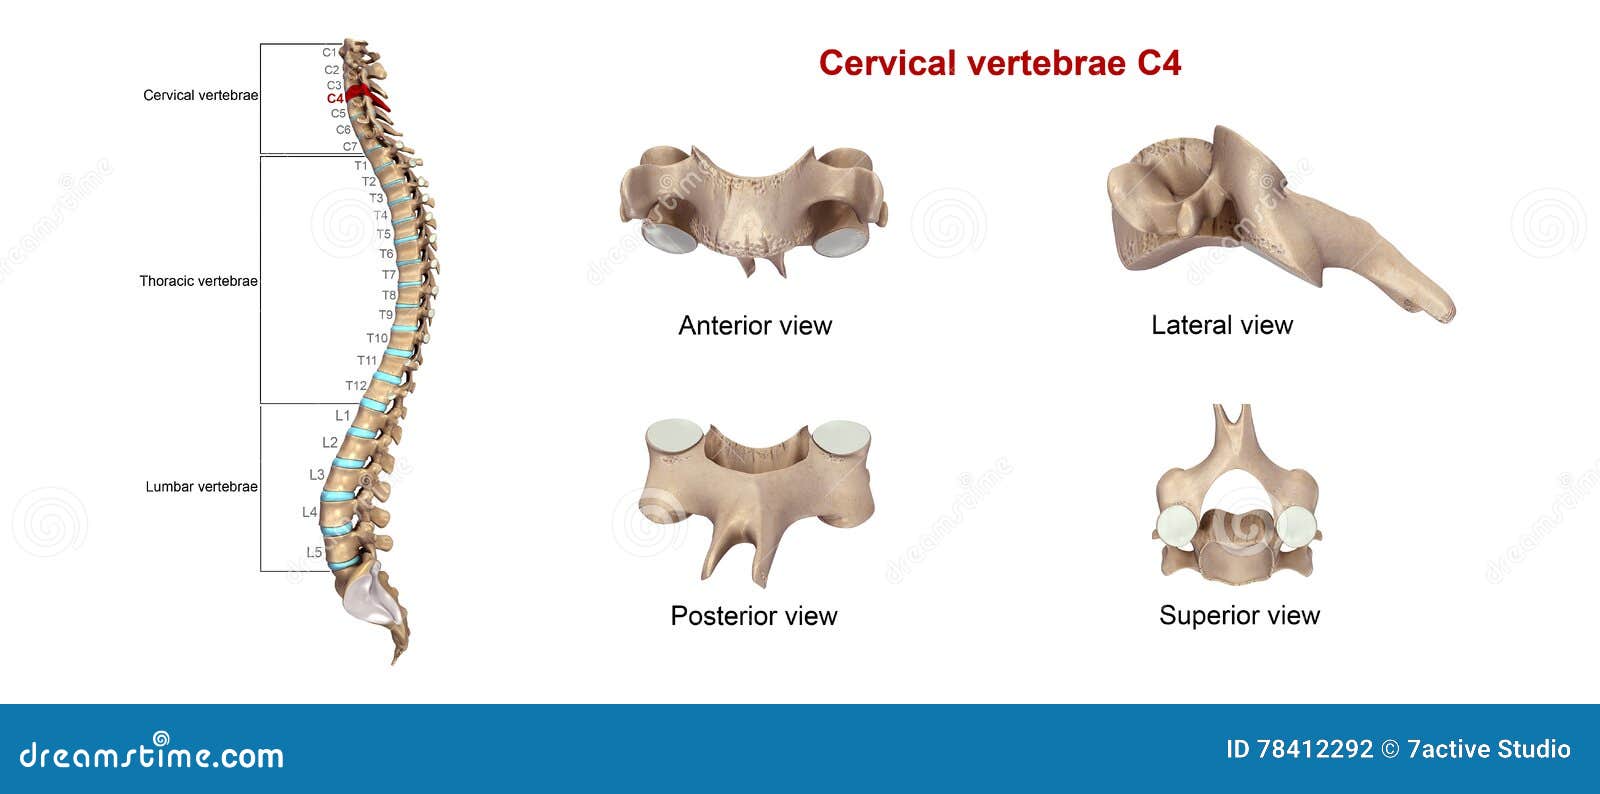 cervical vertebrae c4